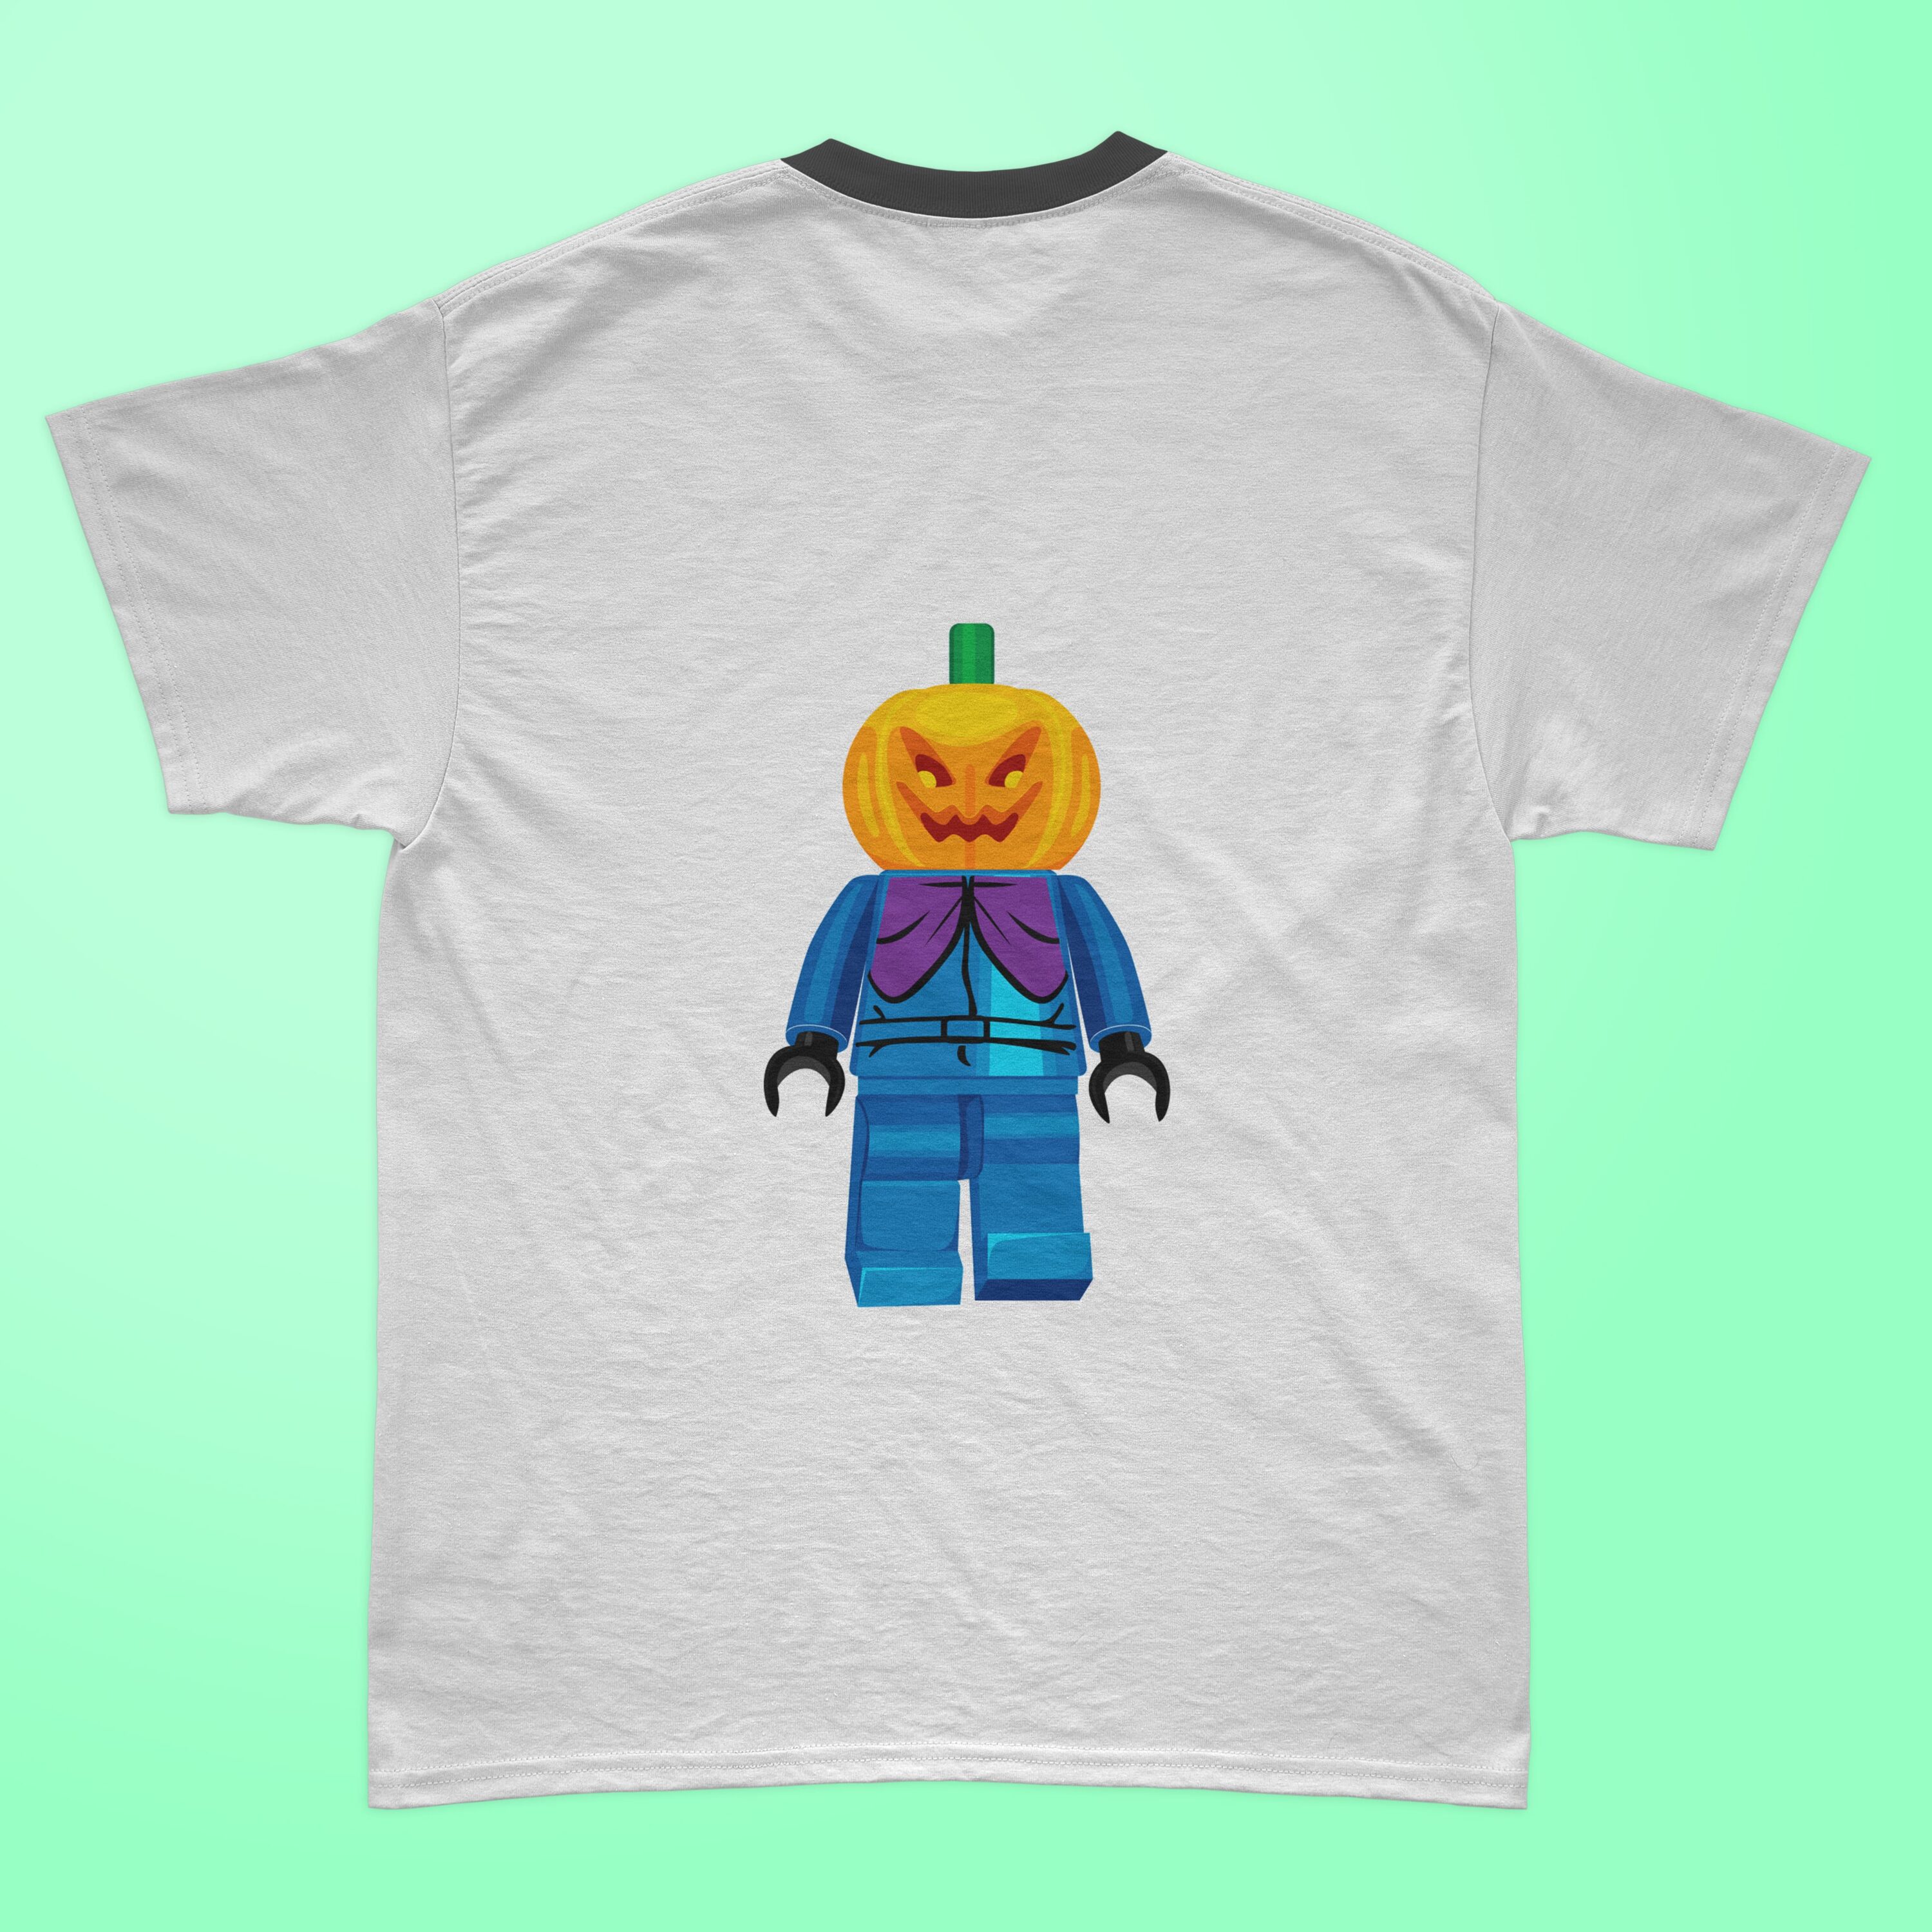 Halloween lego t-shirt design.